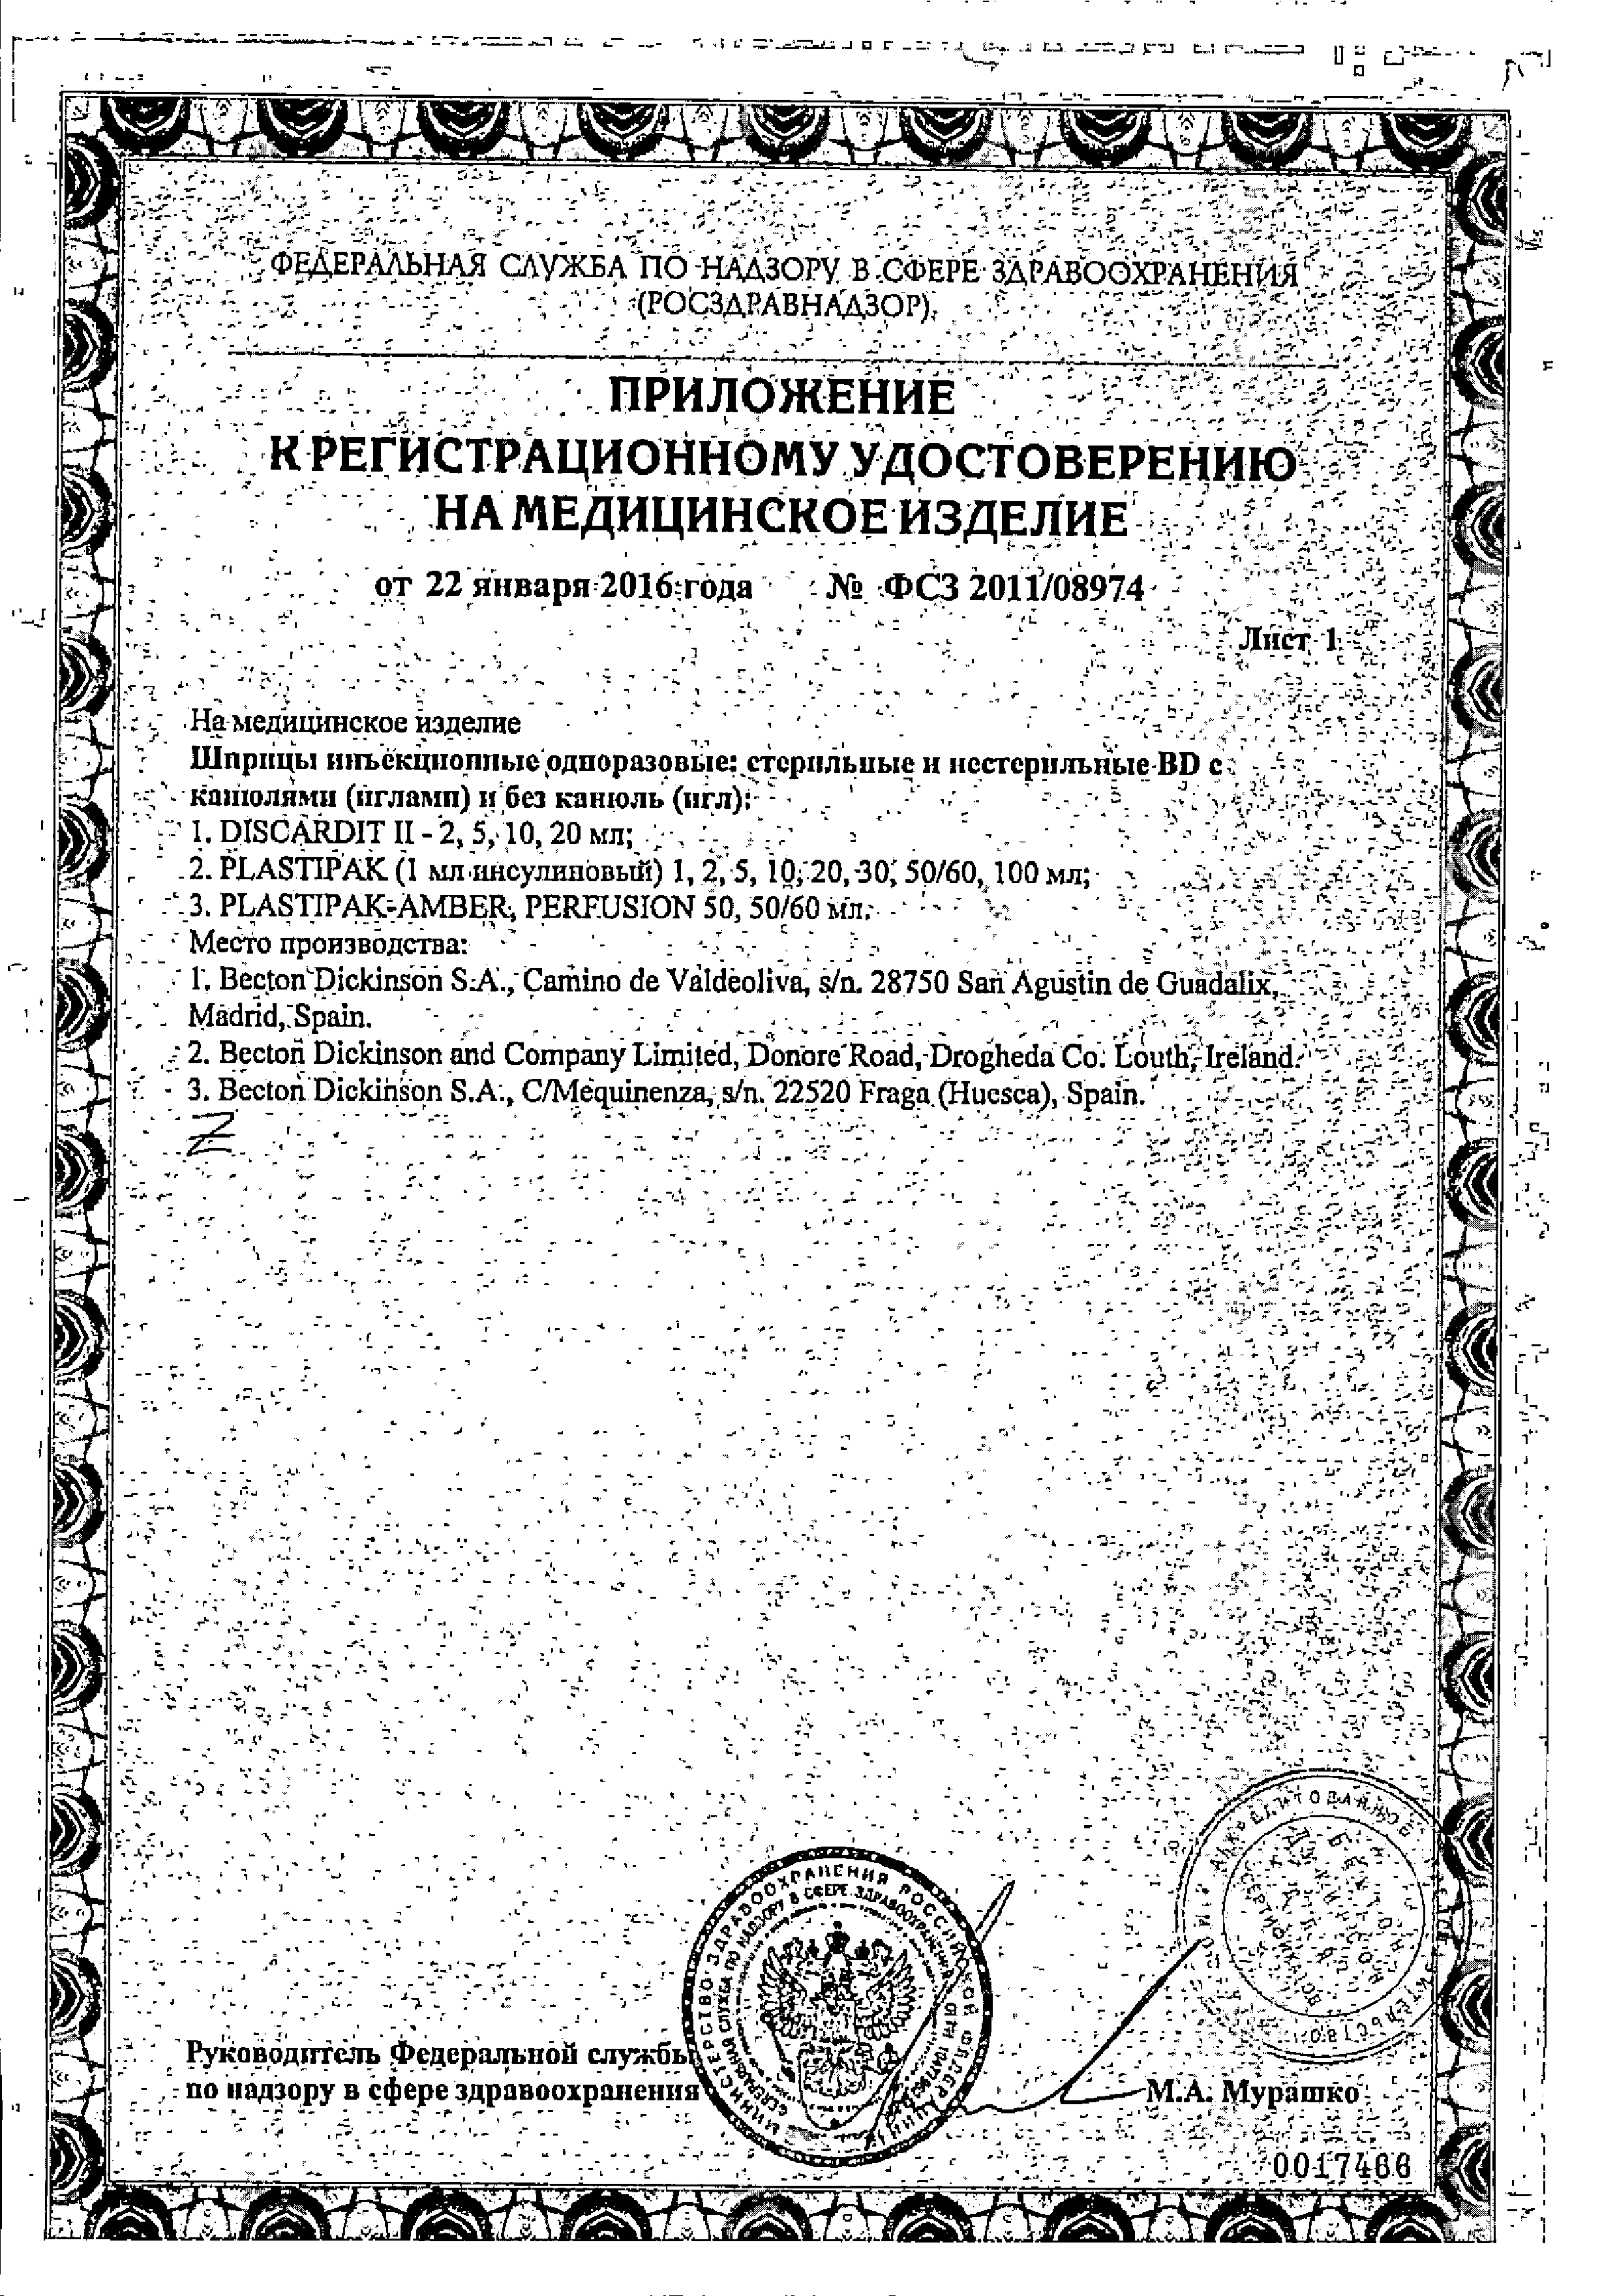 Шприц BD DISCARDIT II 5мл сертификат